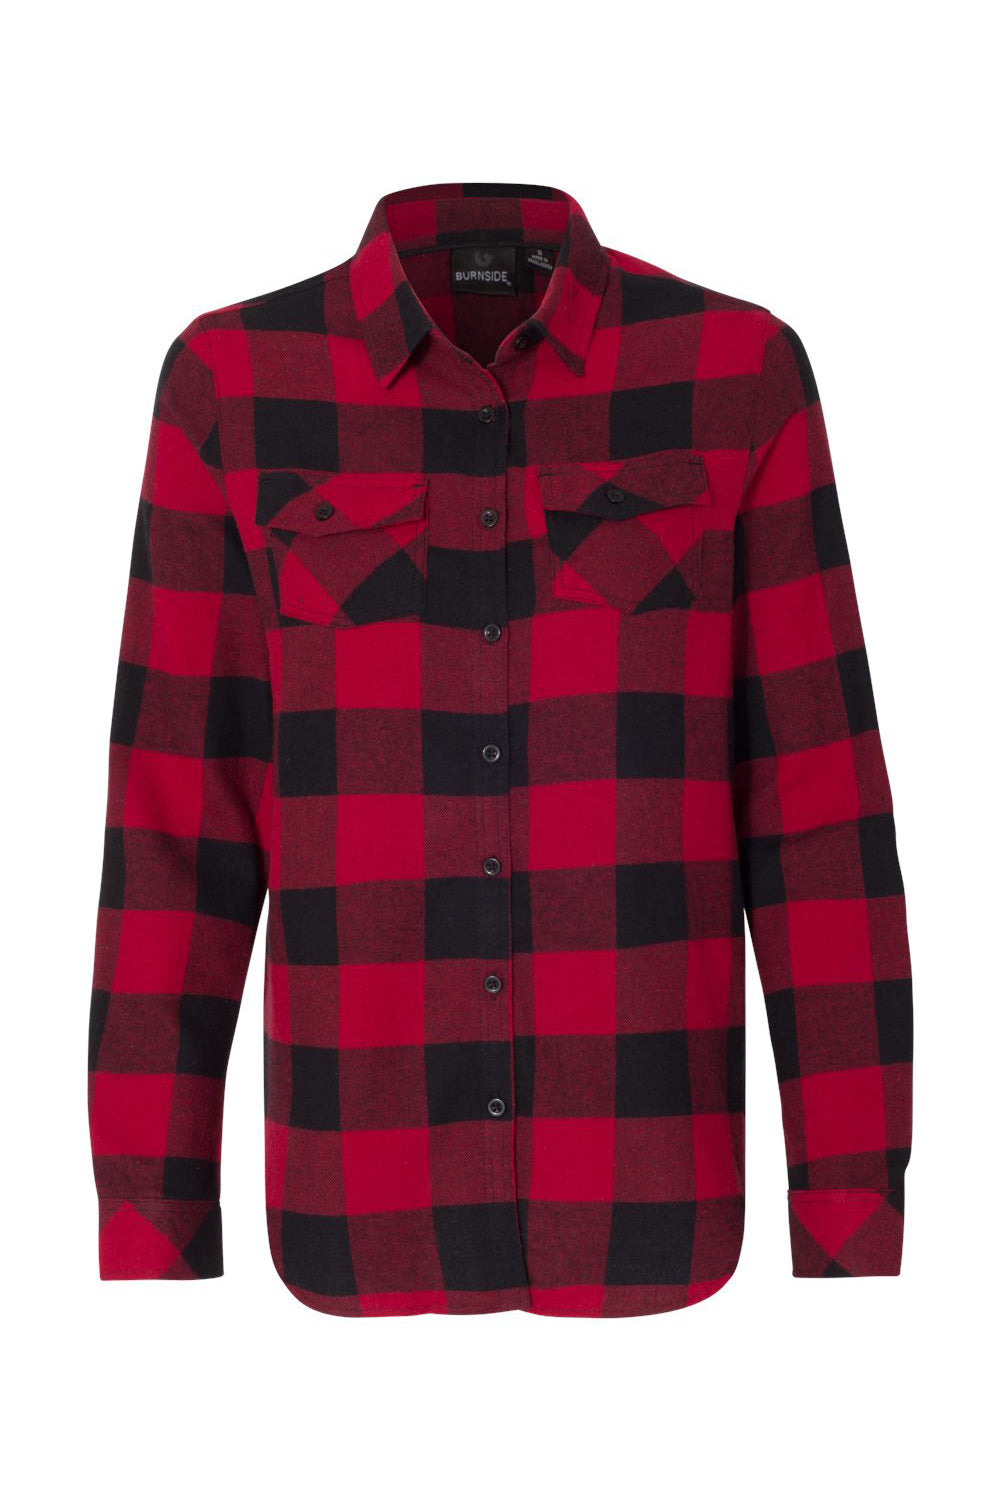 Burnside B5210/5210 Womens Boyfriend Flannel Long Sleeve Button Down Shirt w/ Double Pockets Red/Black Flat Front